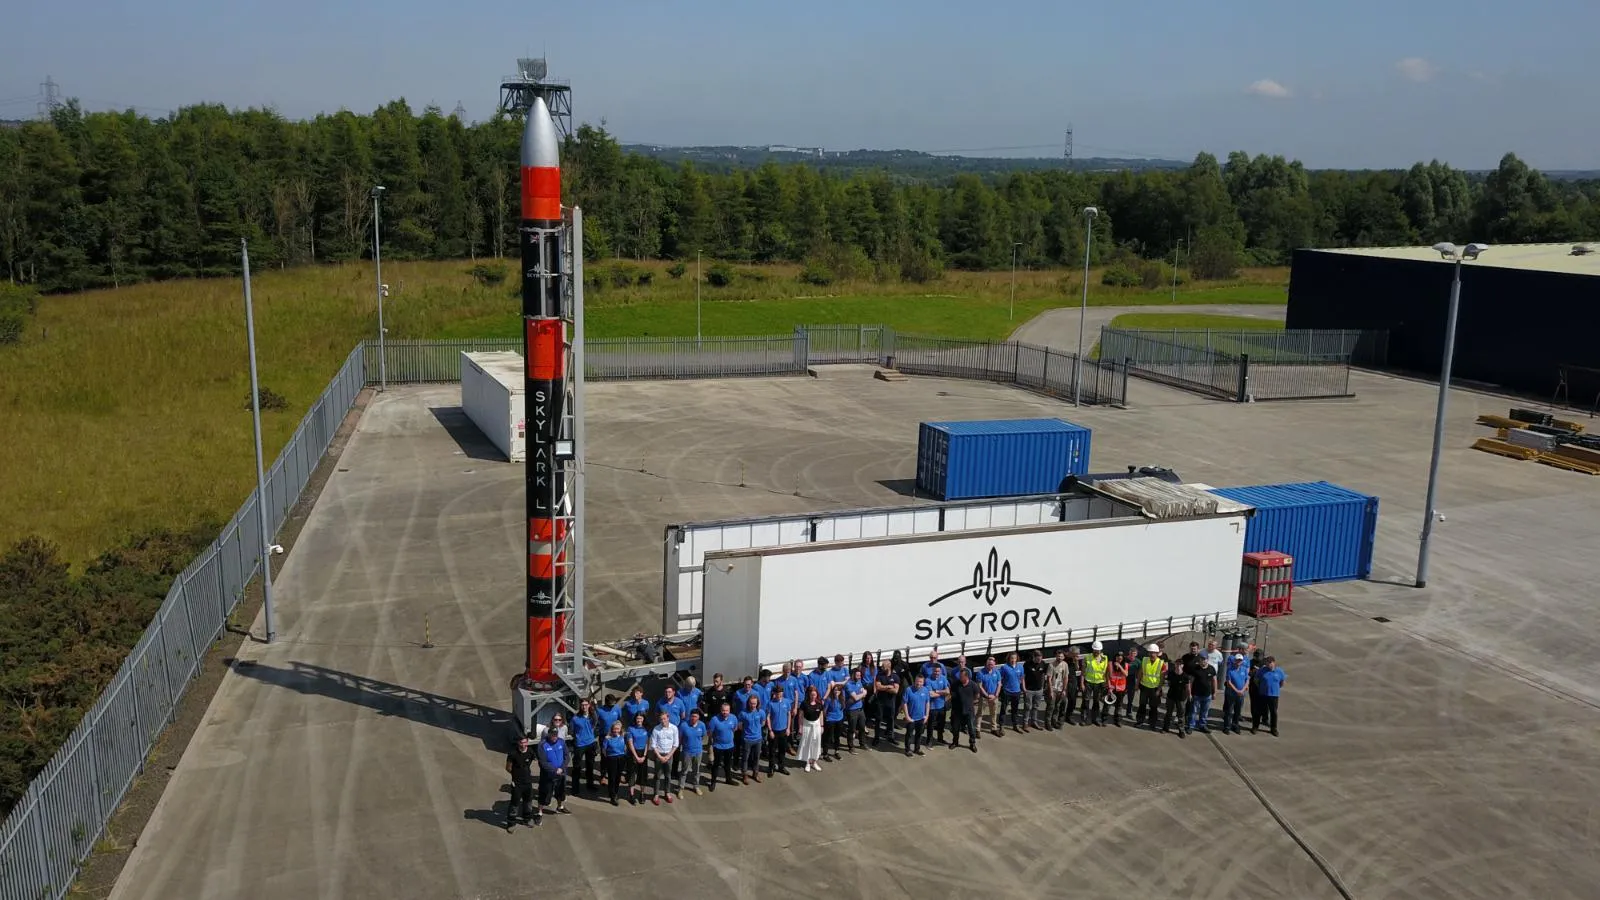 The Skyrora team next to its Skylark L rocket vehicle prototype.